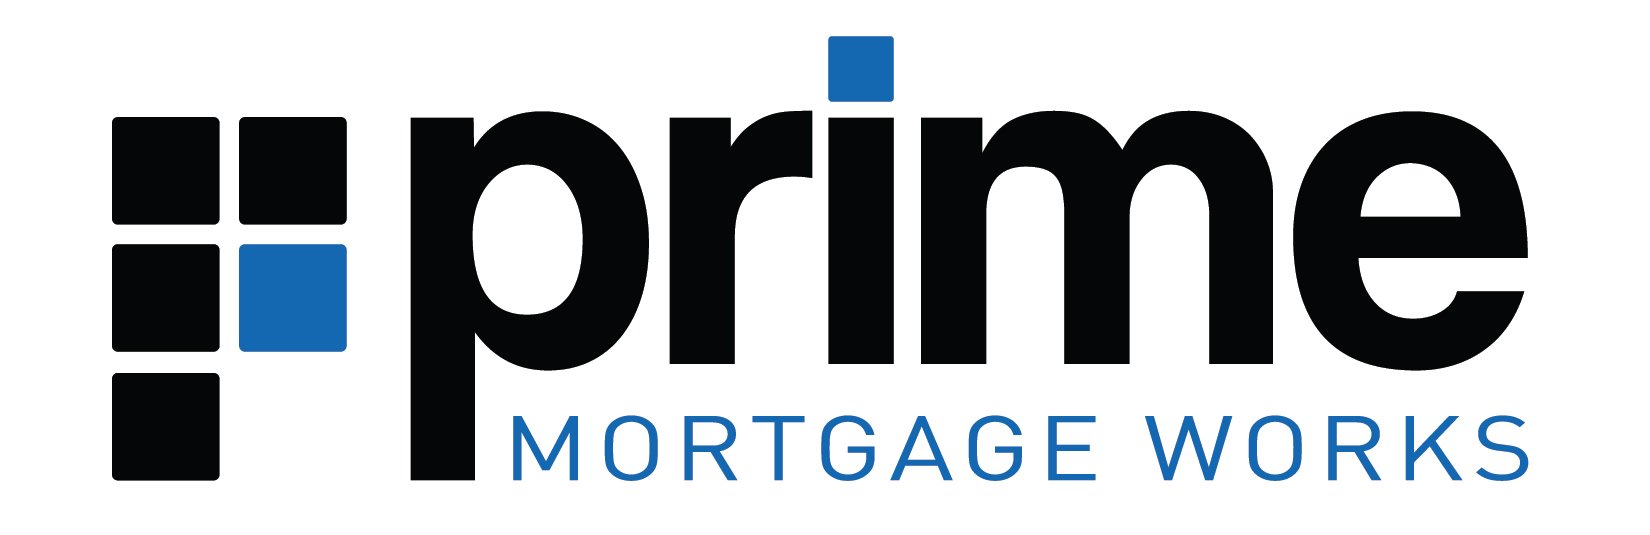 Prime Mortgage Works.jpg